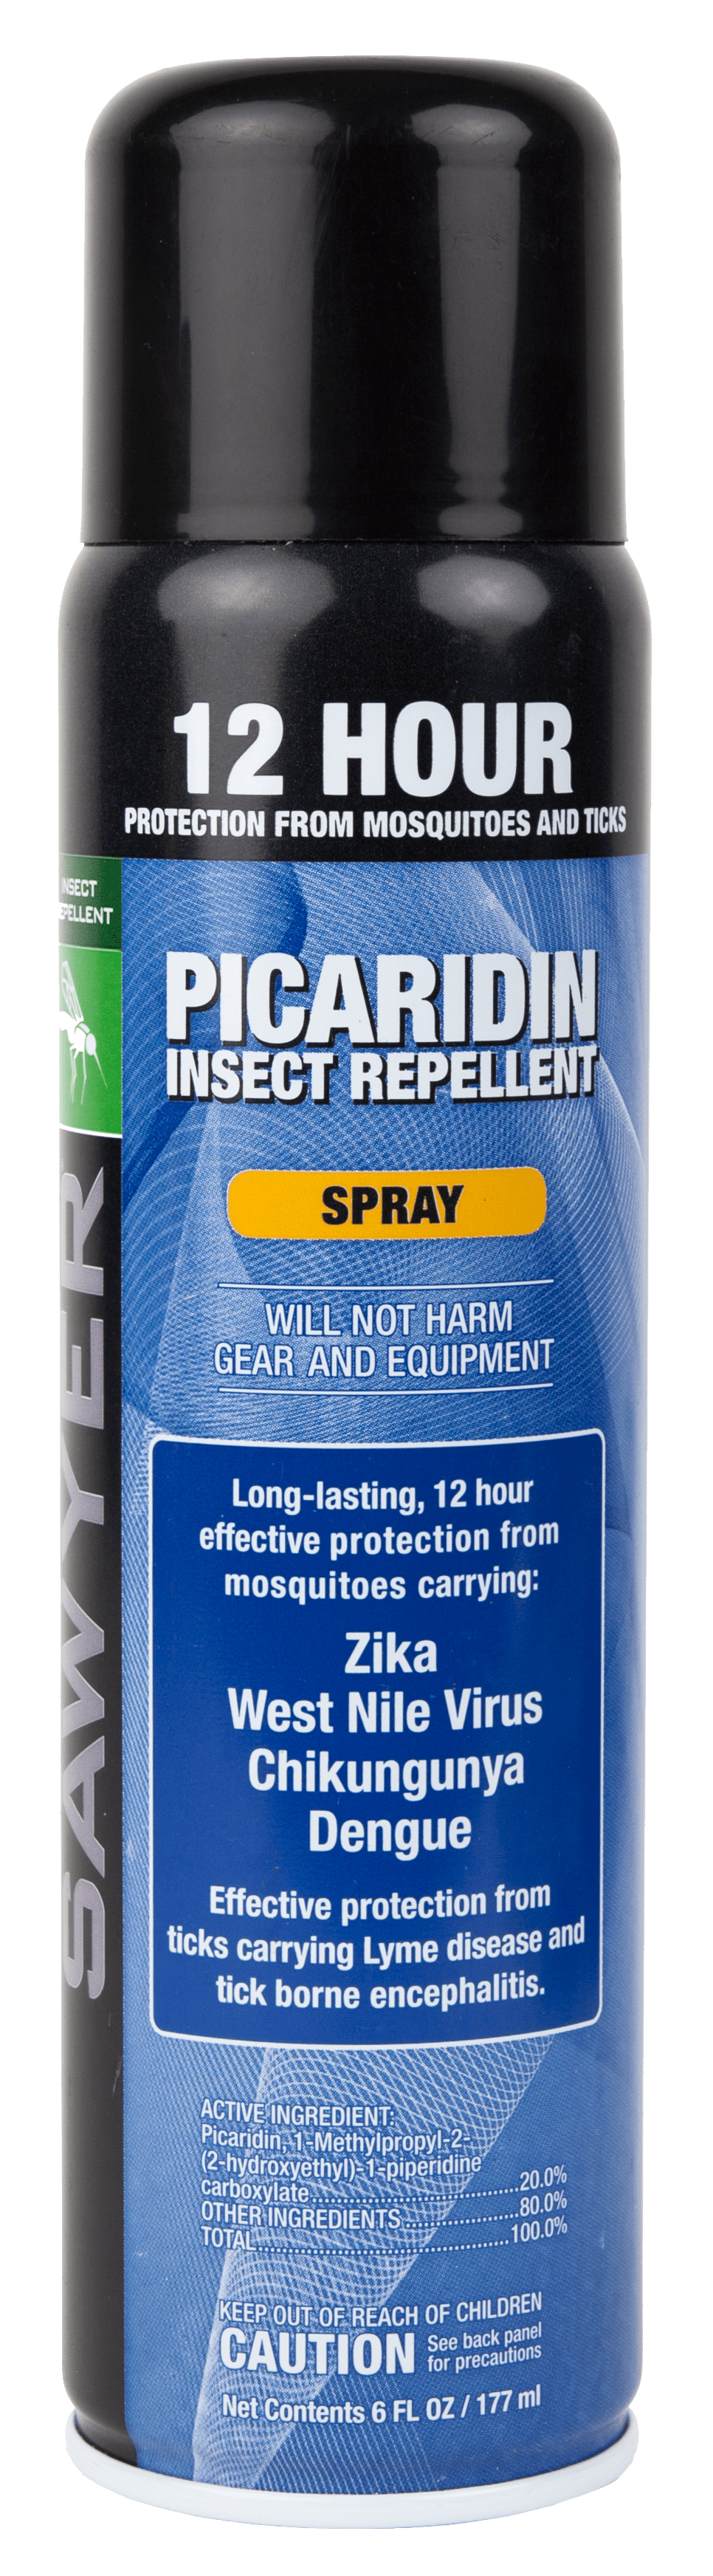 mosquito clipart bug repellent